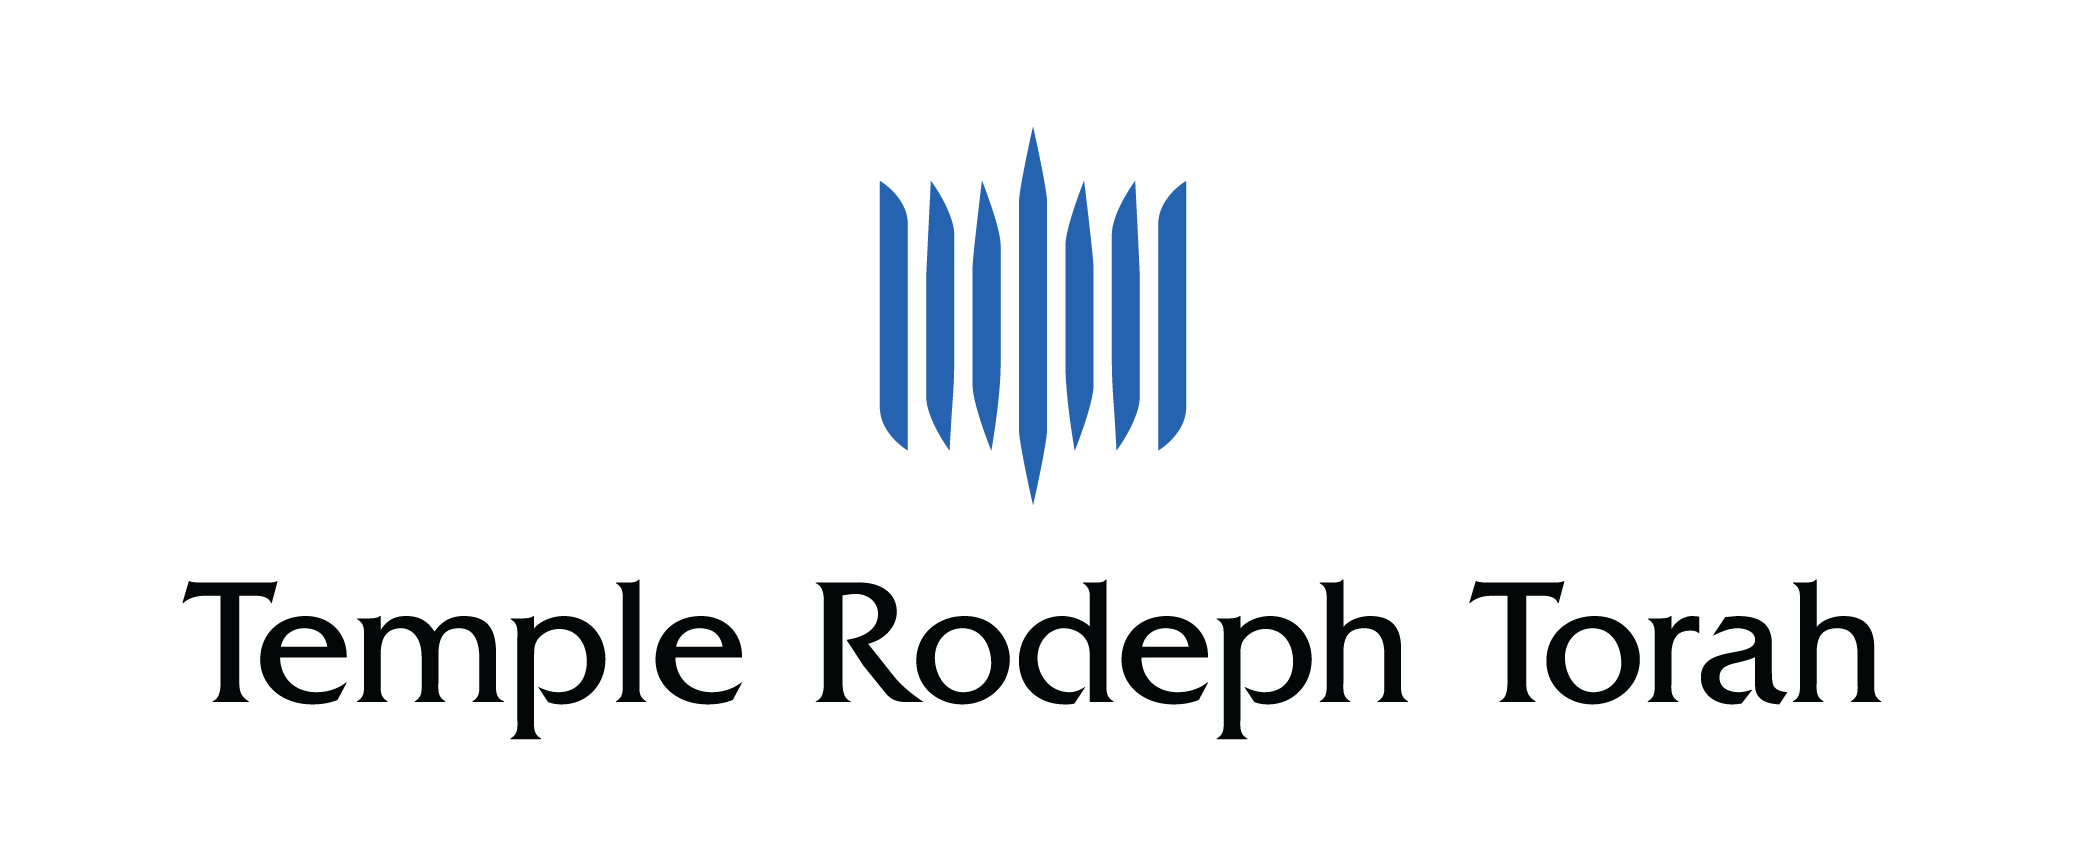 Torah Logo - TRT Home Page - Temple Rodeph Torah | Reform Temple | Marlboro New ...